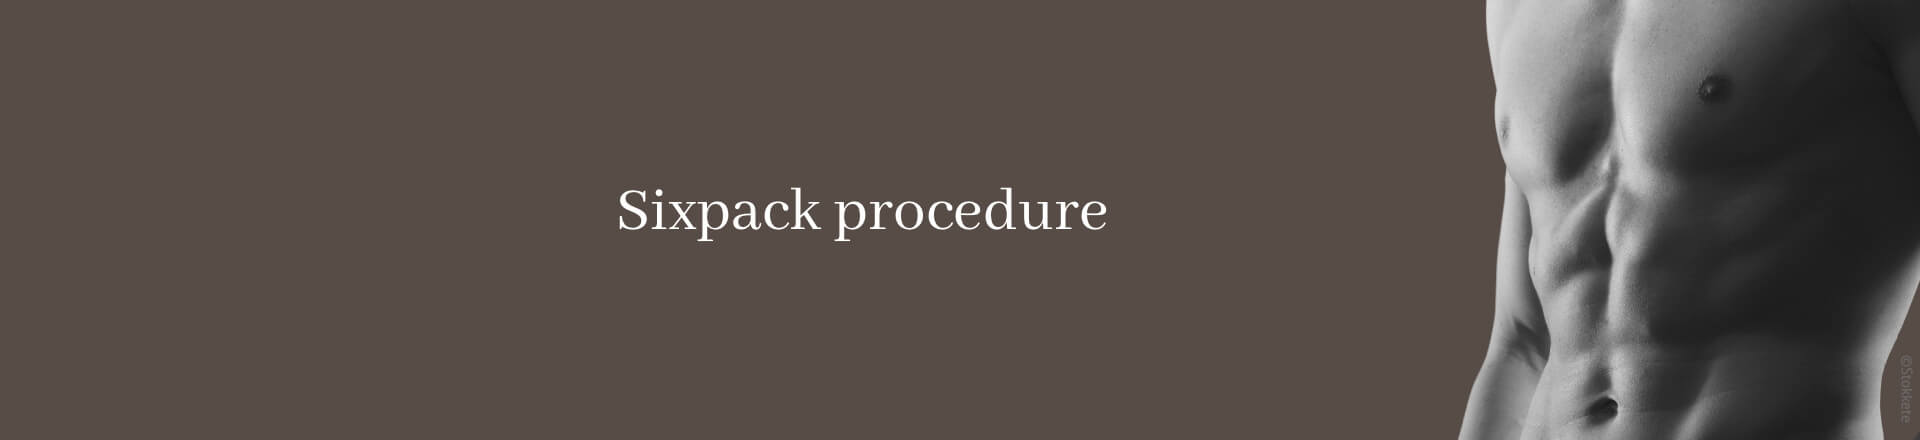 Sixpack Procedure, Difine, Dr. Narwan, Plastic Surgery, Essen 